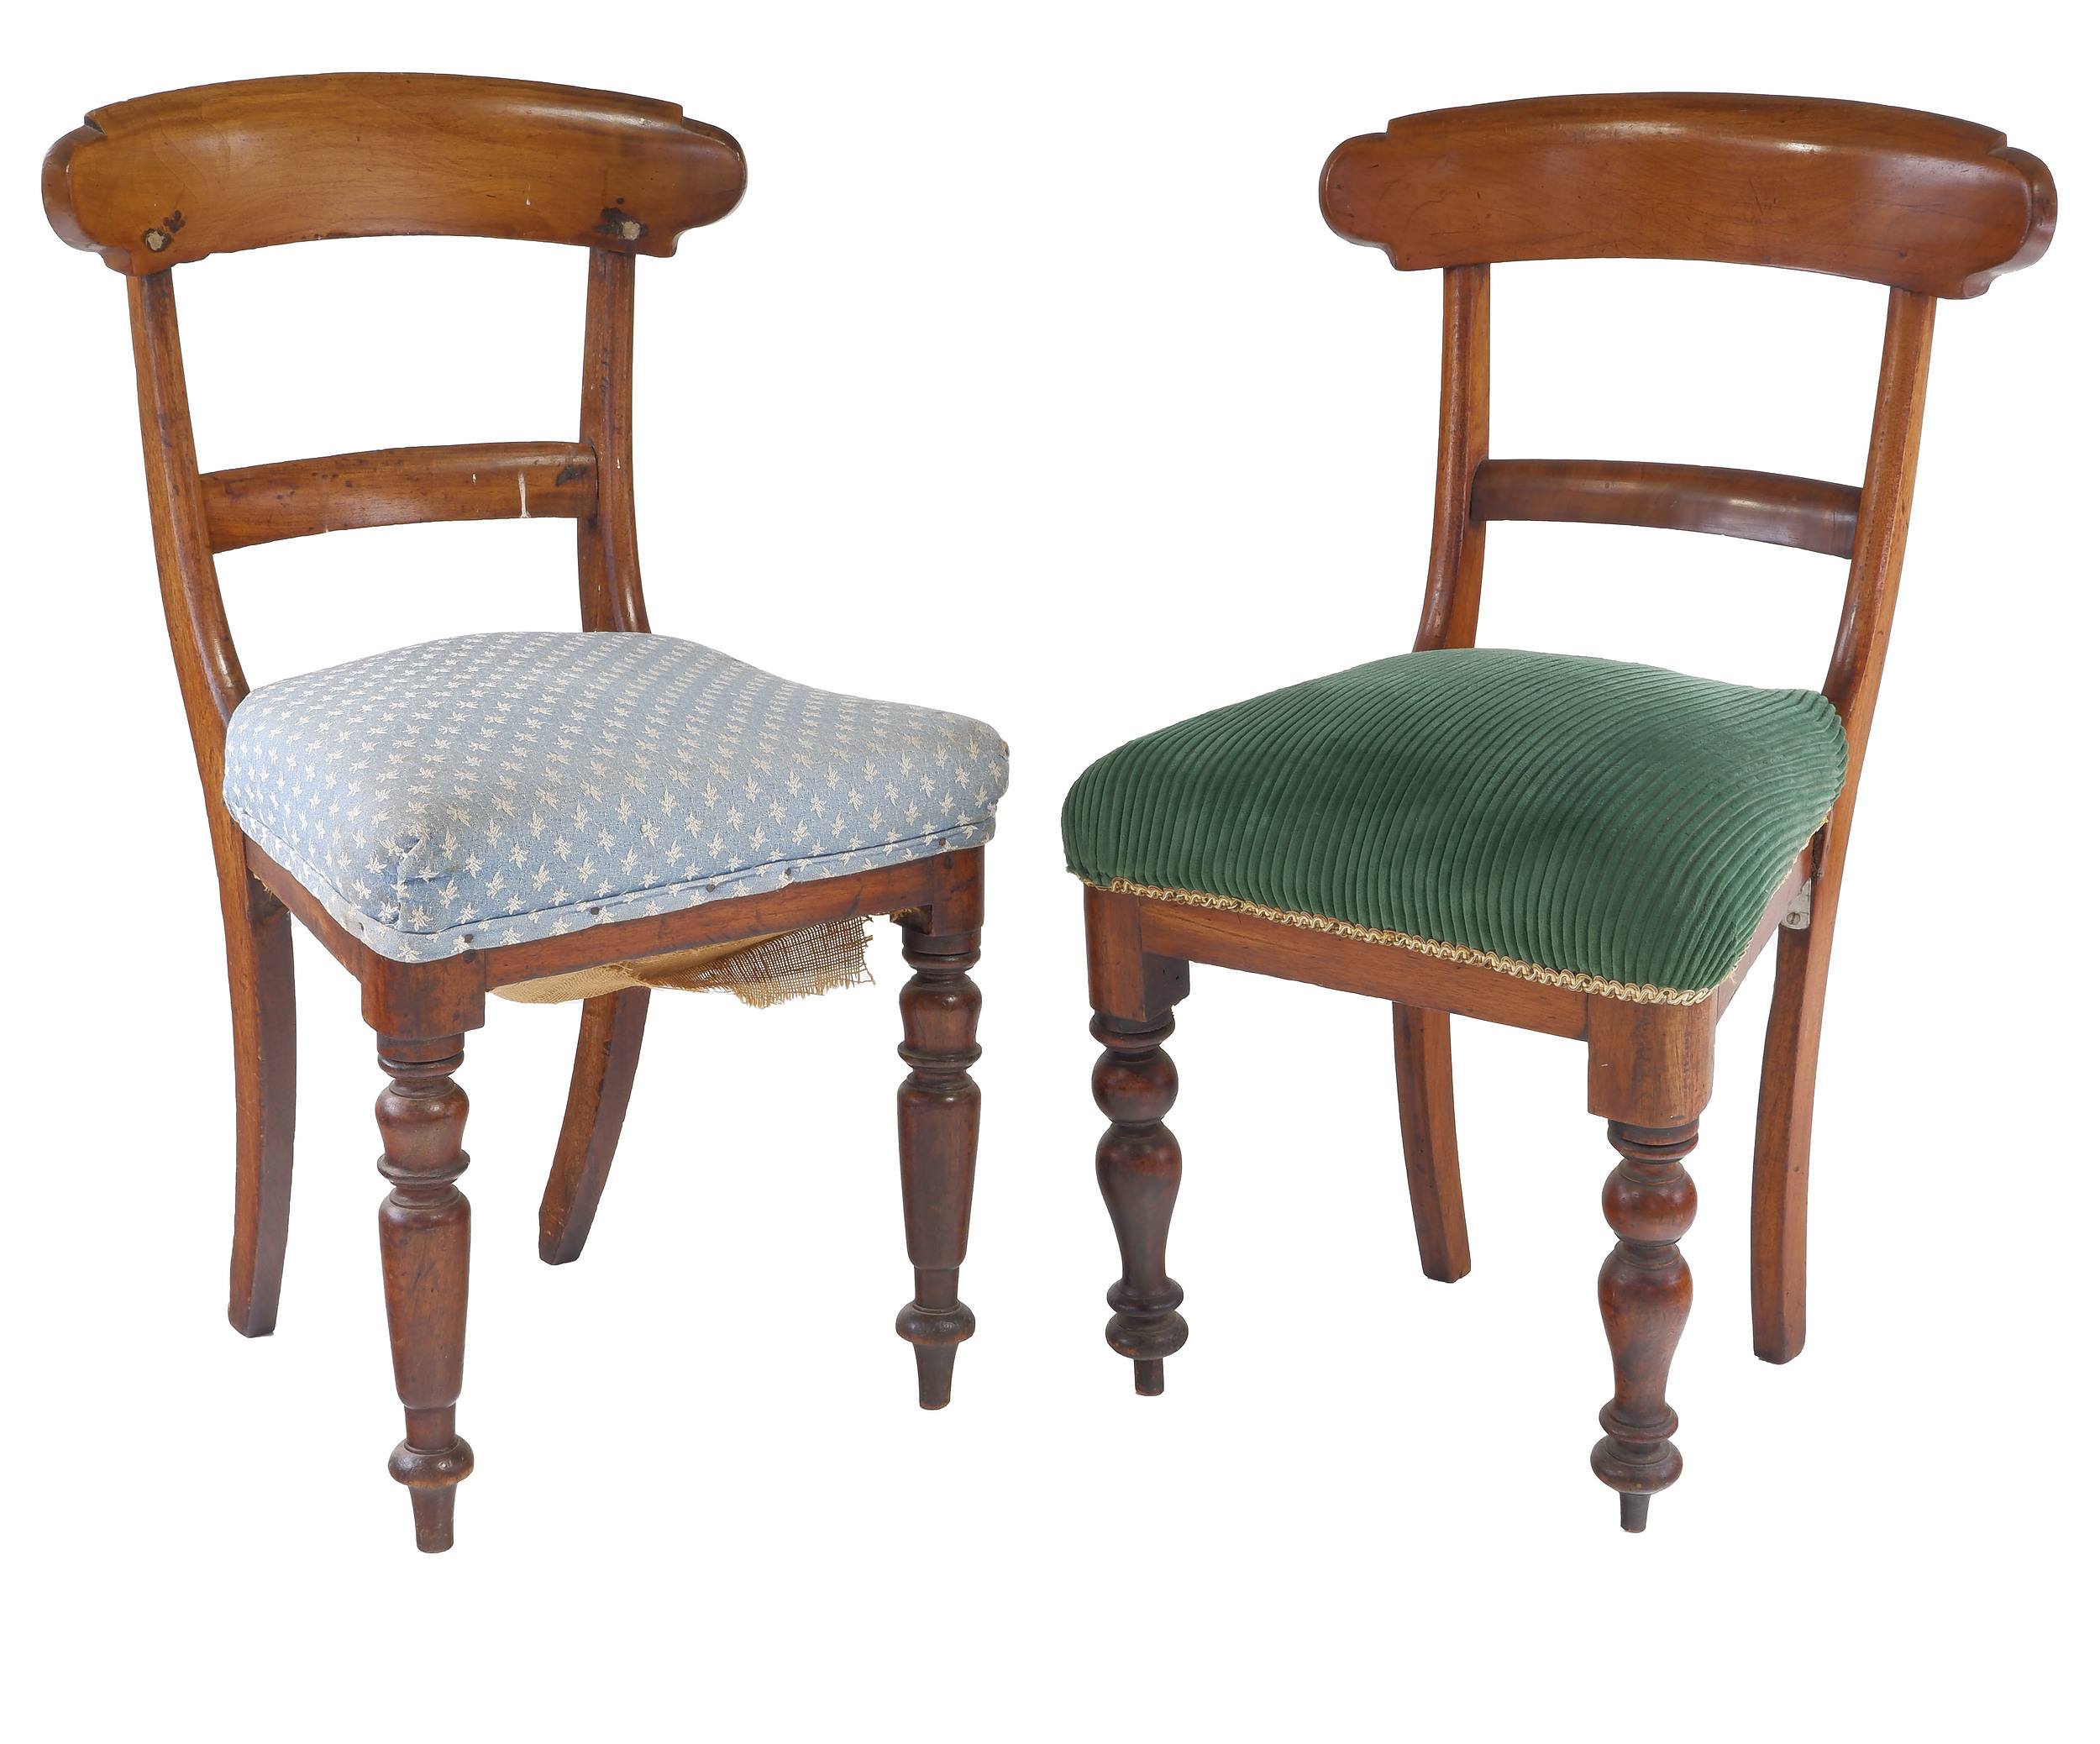 'Two Australian Cedar Barback Chairs ex Gidleigh via Bungendore NSW'